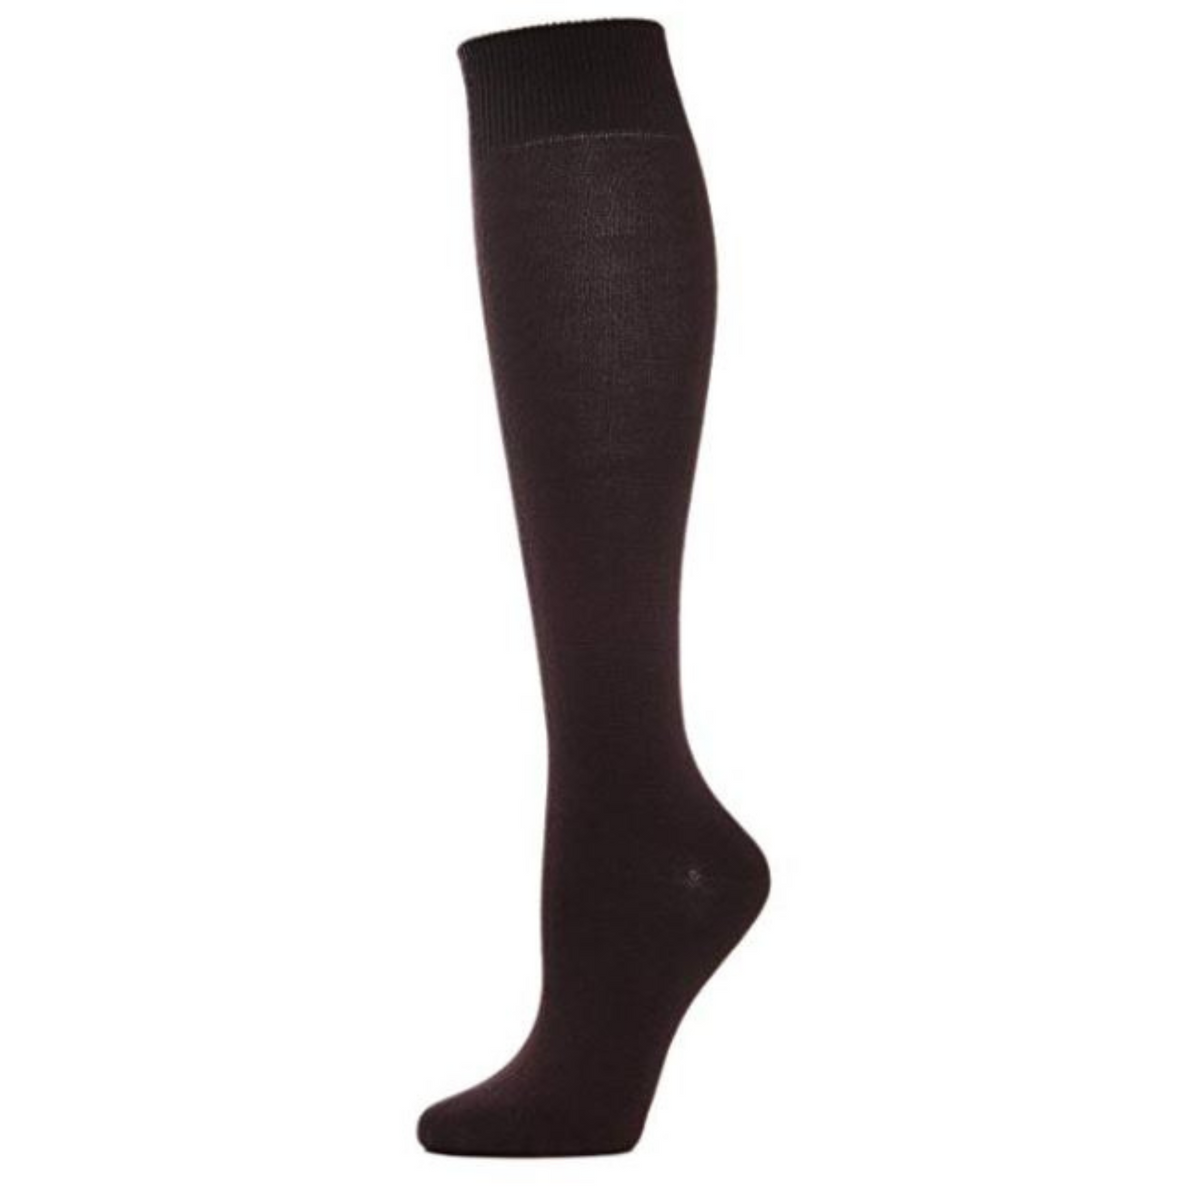 Espresso MeMoi Bamboo Knee High women&#39;s sock on display from side